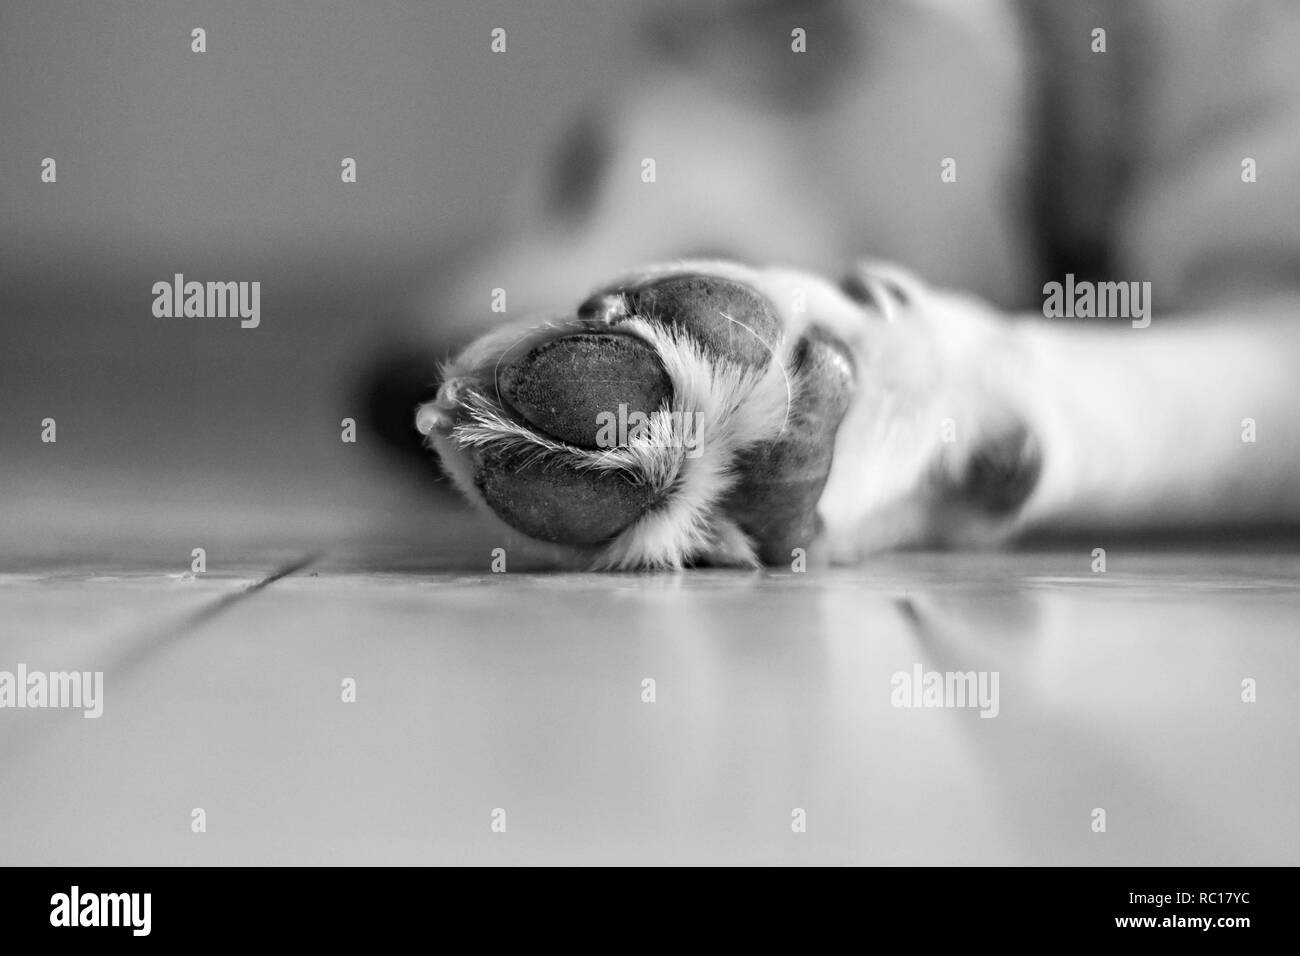 Dog paw pad in macro detail. Cute sleeping doggy Labrador retriever - Image Stock Photo